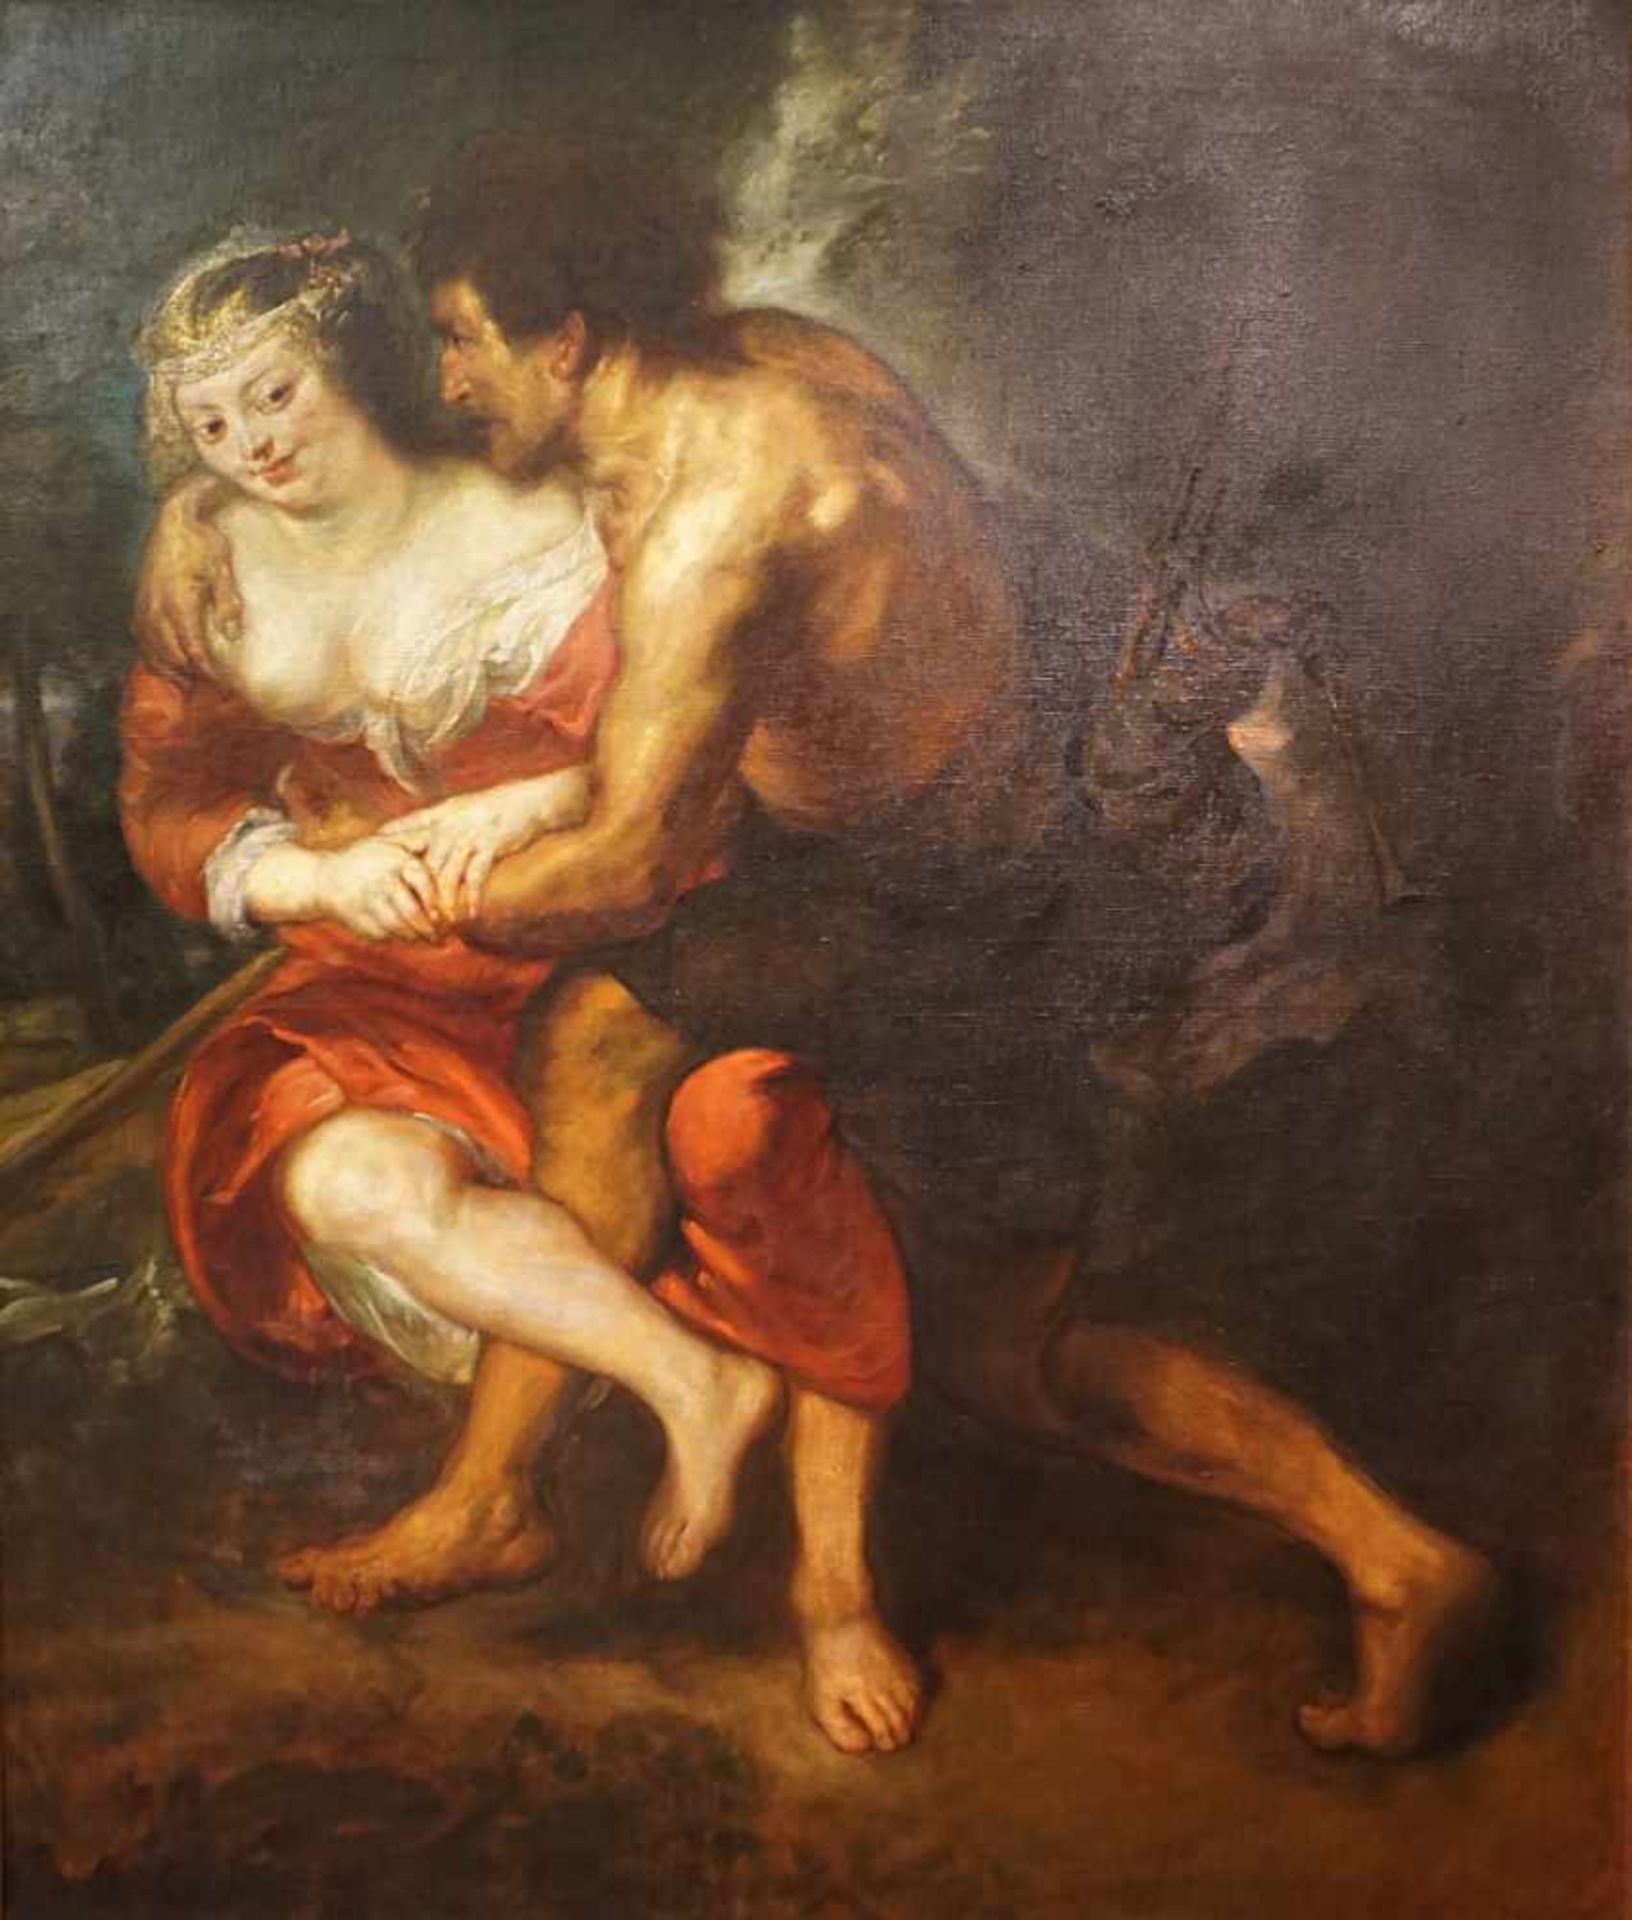 1 Ölgemälde "Schäferszene" Kopie nach Peter Paul Rubens,